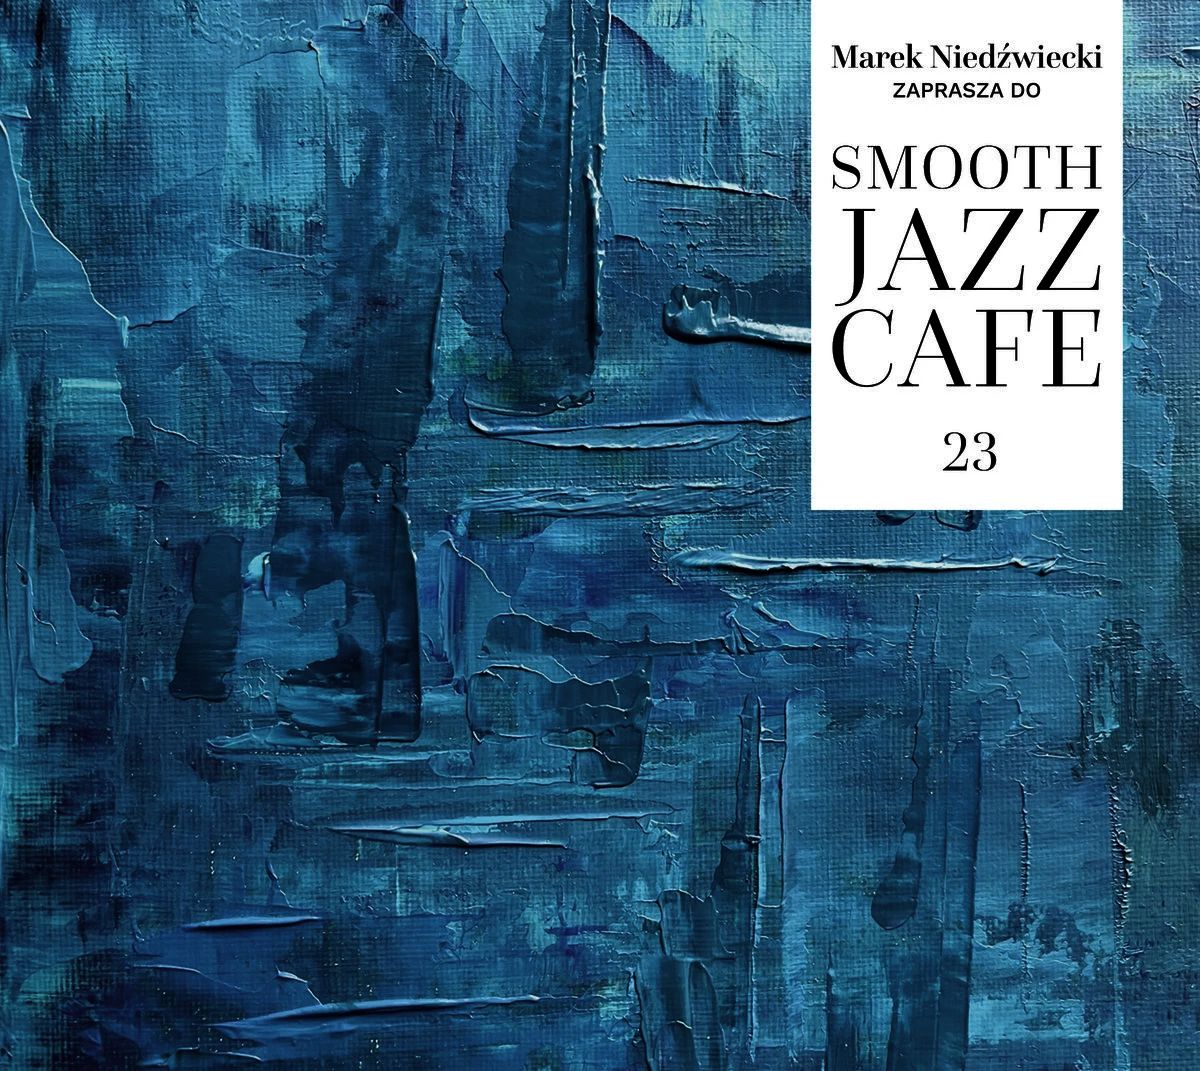 Smooth Jazz Cafe 23